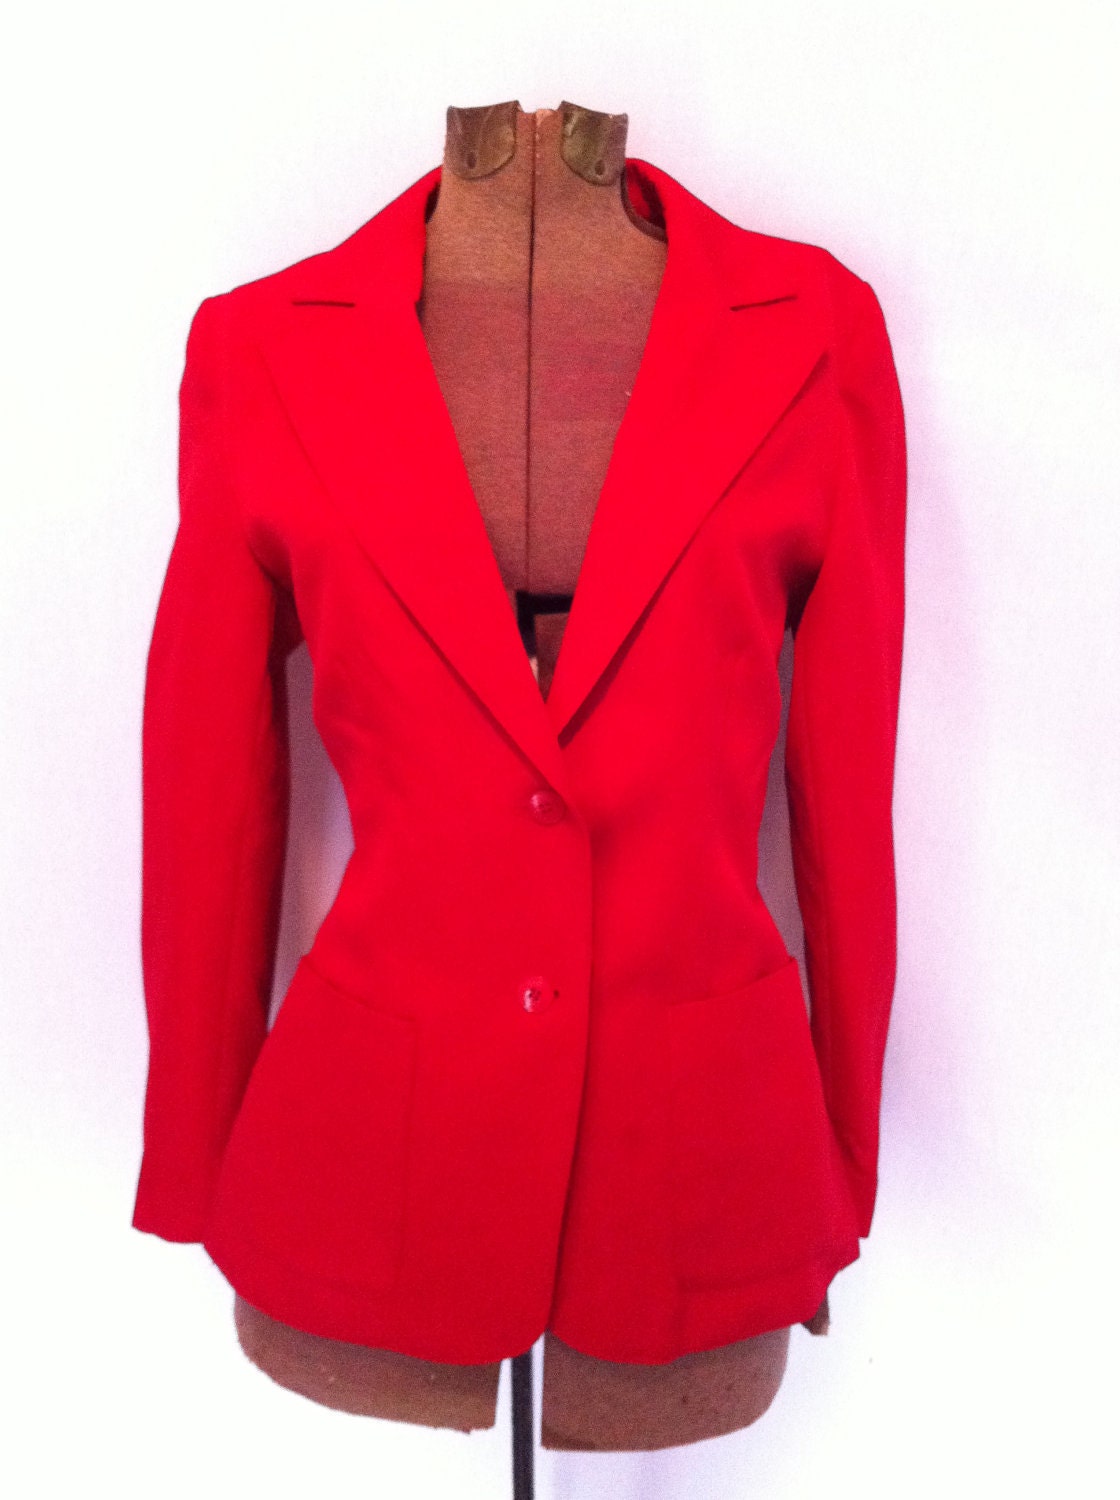 Vintage cherry RED blazer jacket by lotusjrk on Etsy